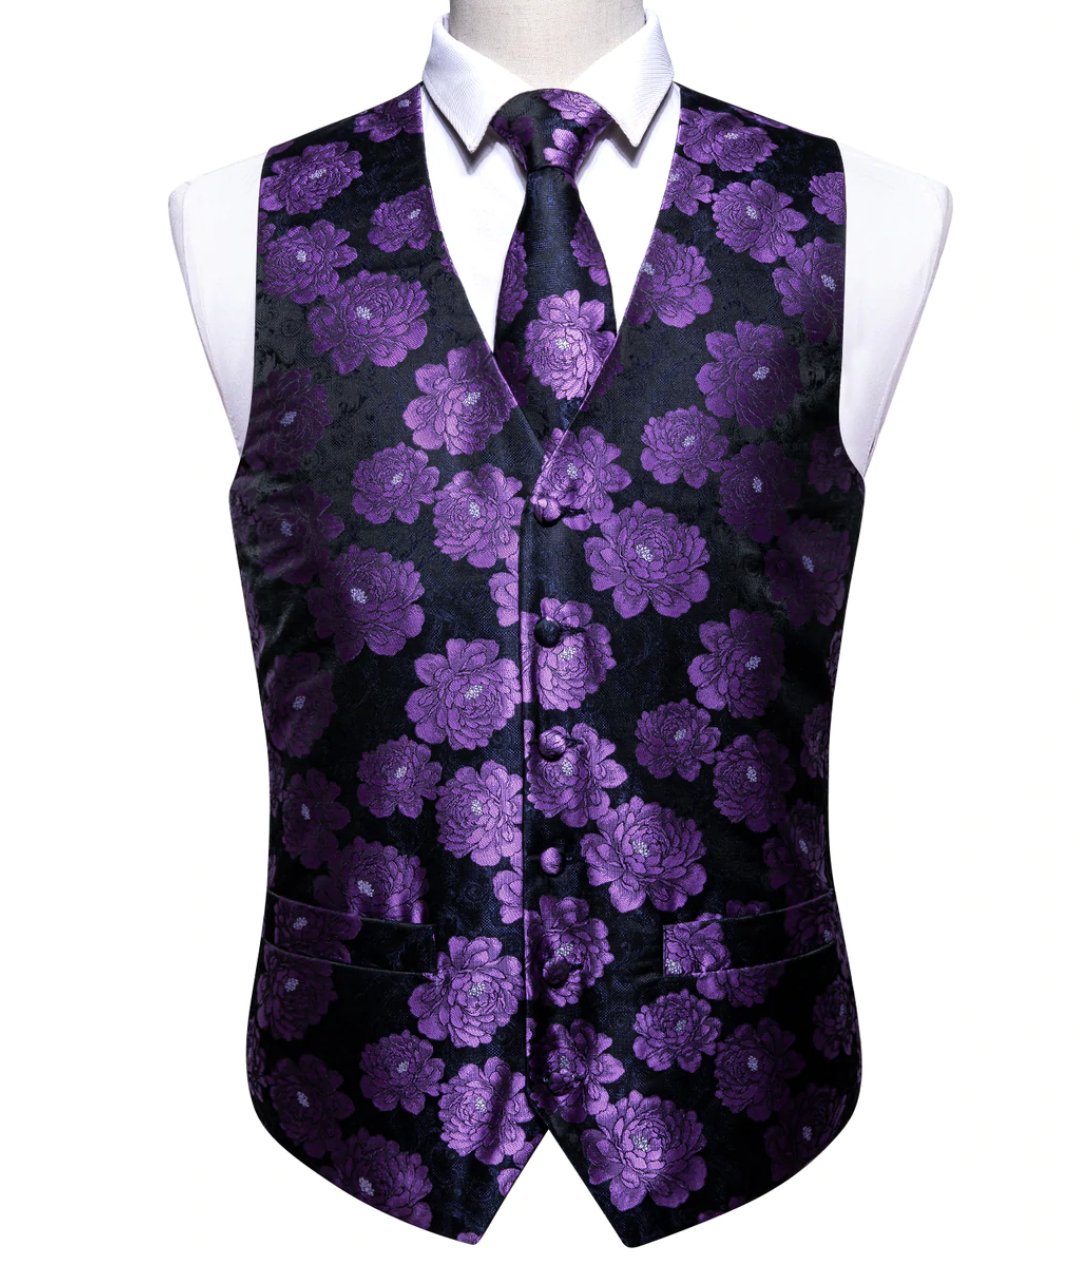 Classy Men's Purple Flower Silk Vest Necktie Pocket square Cufflinks Set.MJ - 2087 - SimonVon Shop